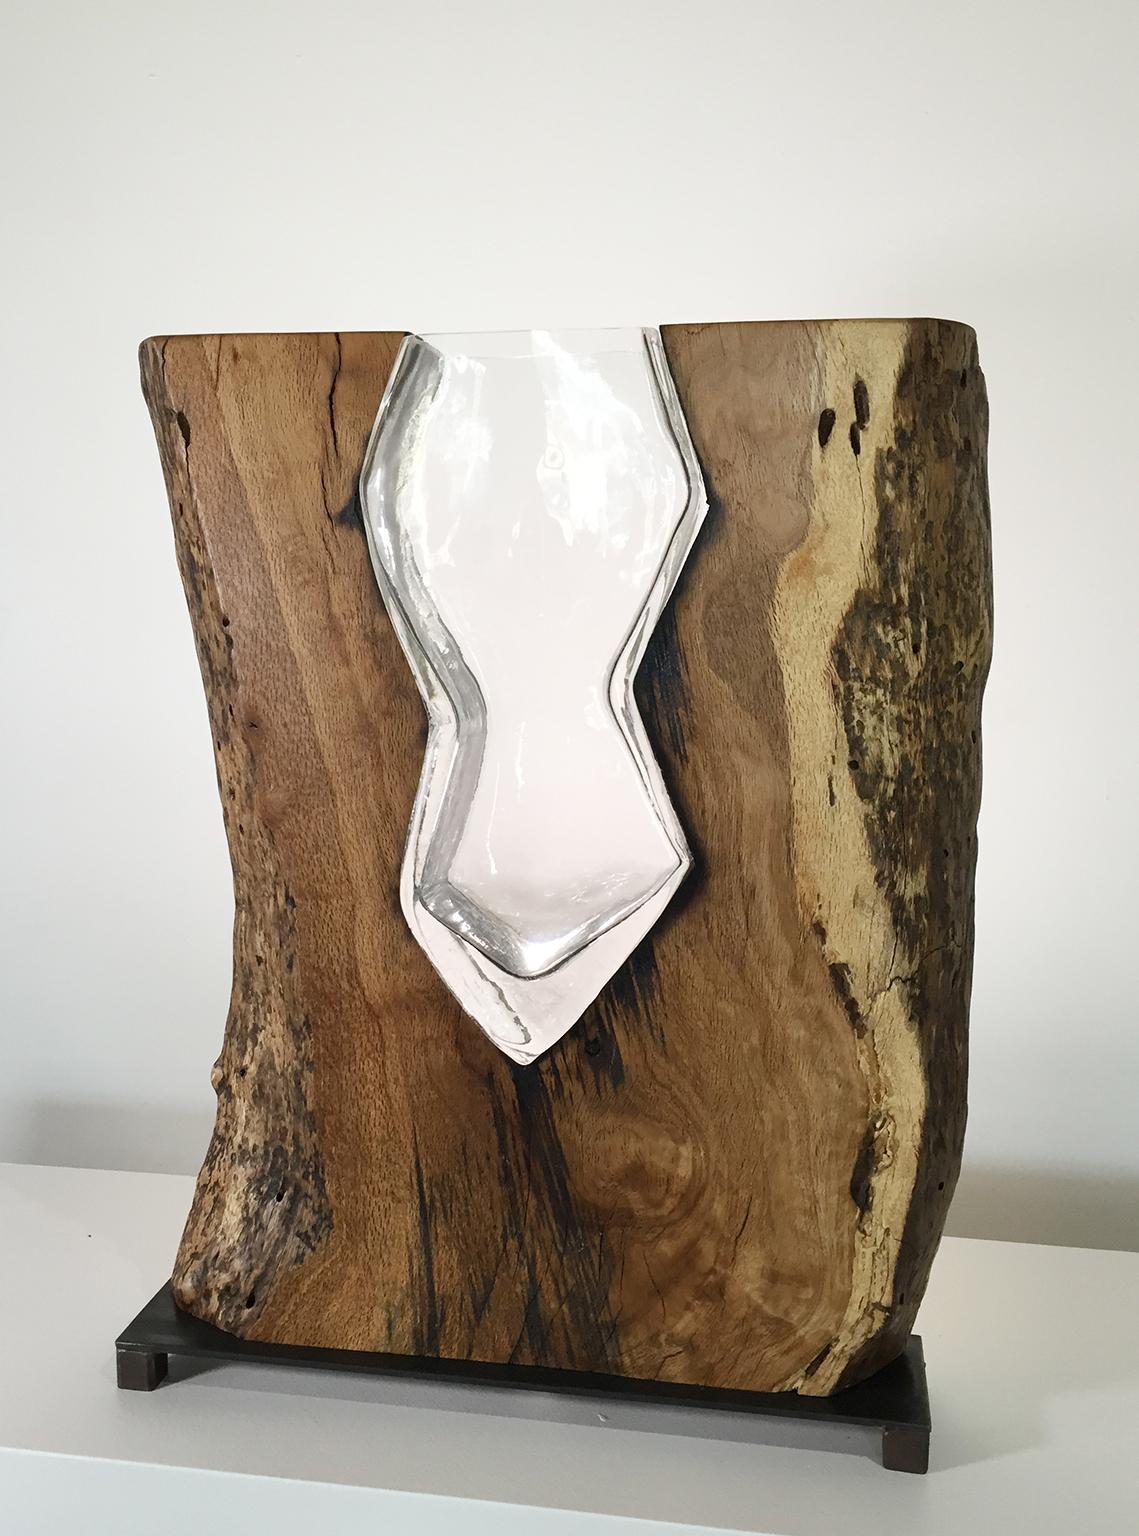 Hand Blown Clear Glass with Live Edge Wood, Vase Sculpture, Scott Slagerman - Mixed Media Art by Scott Slagerman / Jim Fishman